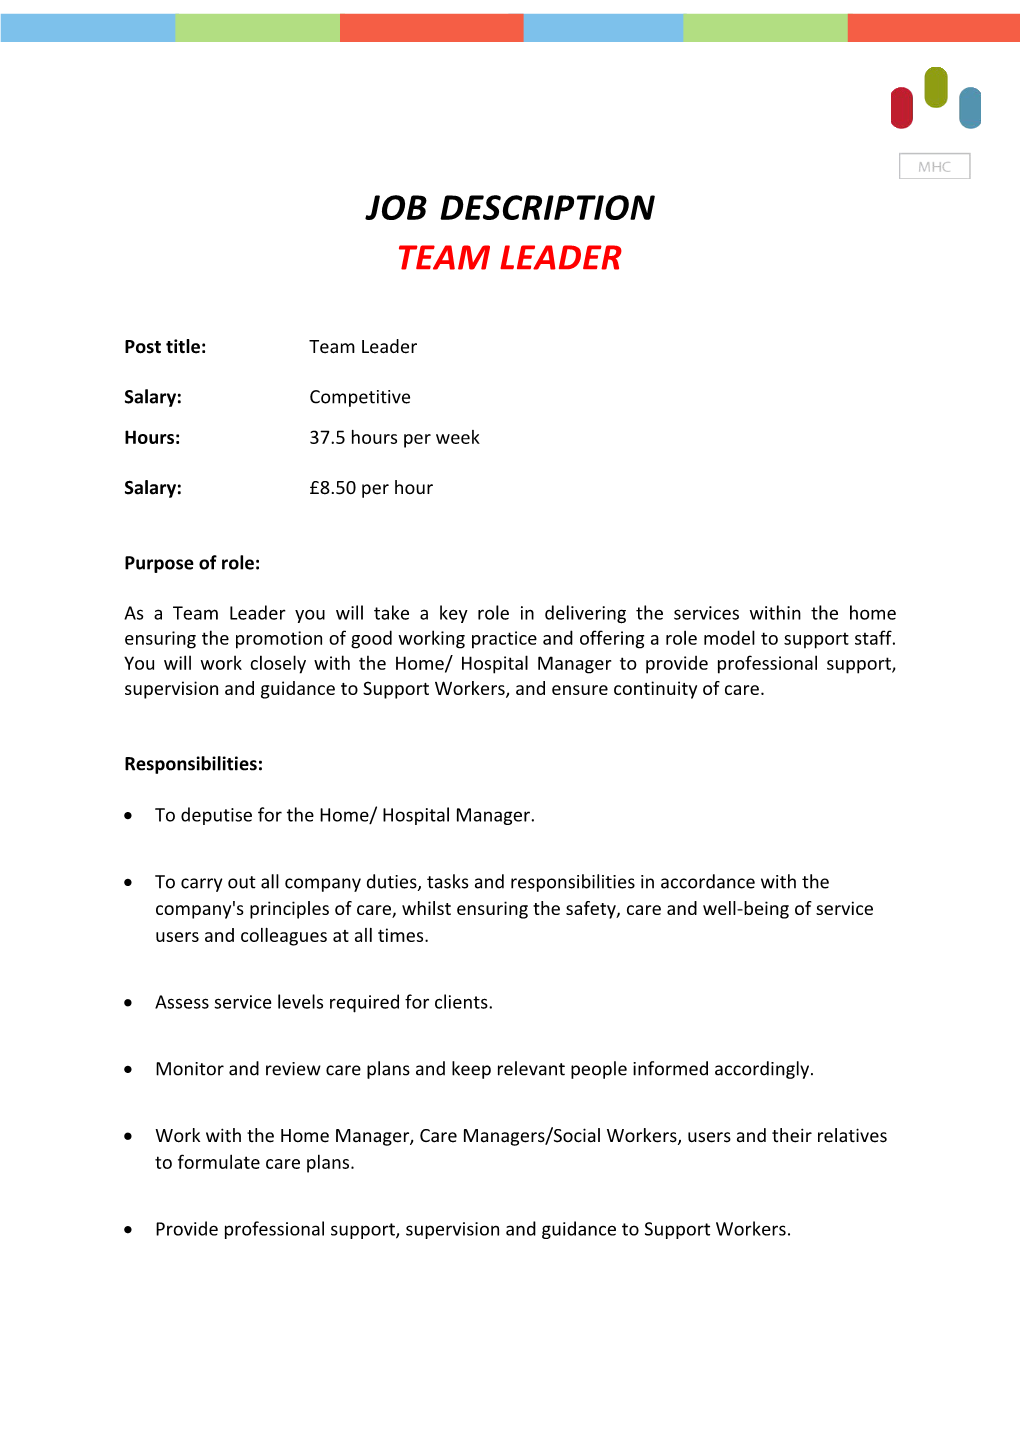 Job Description TEAM LEADER